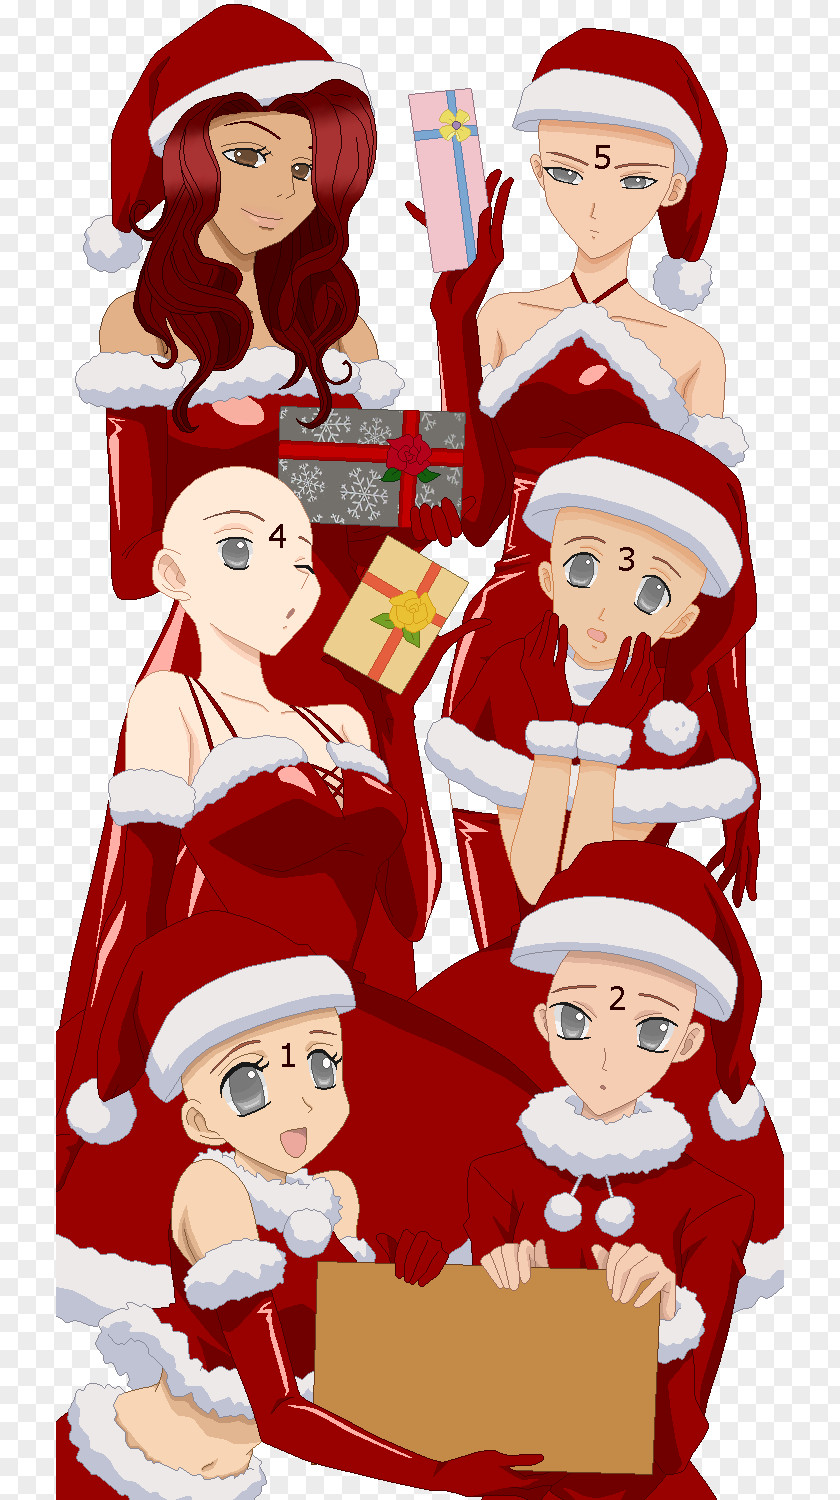 Closed Christmas Santa Claus Decoration Illustration Clip Art Human Behavior PNG